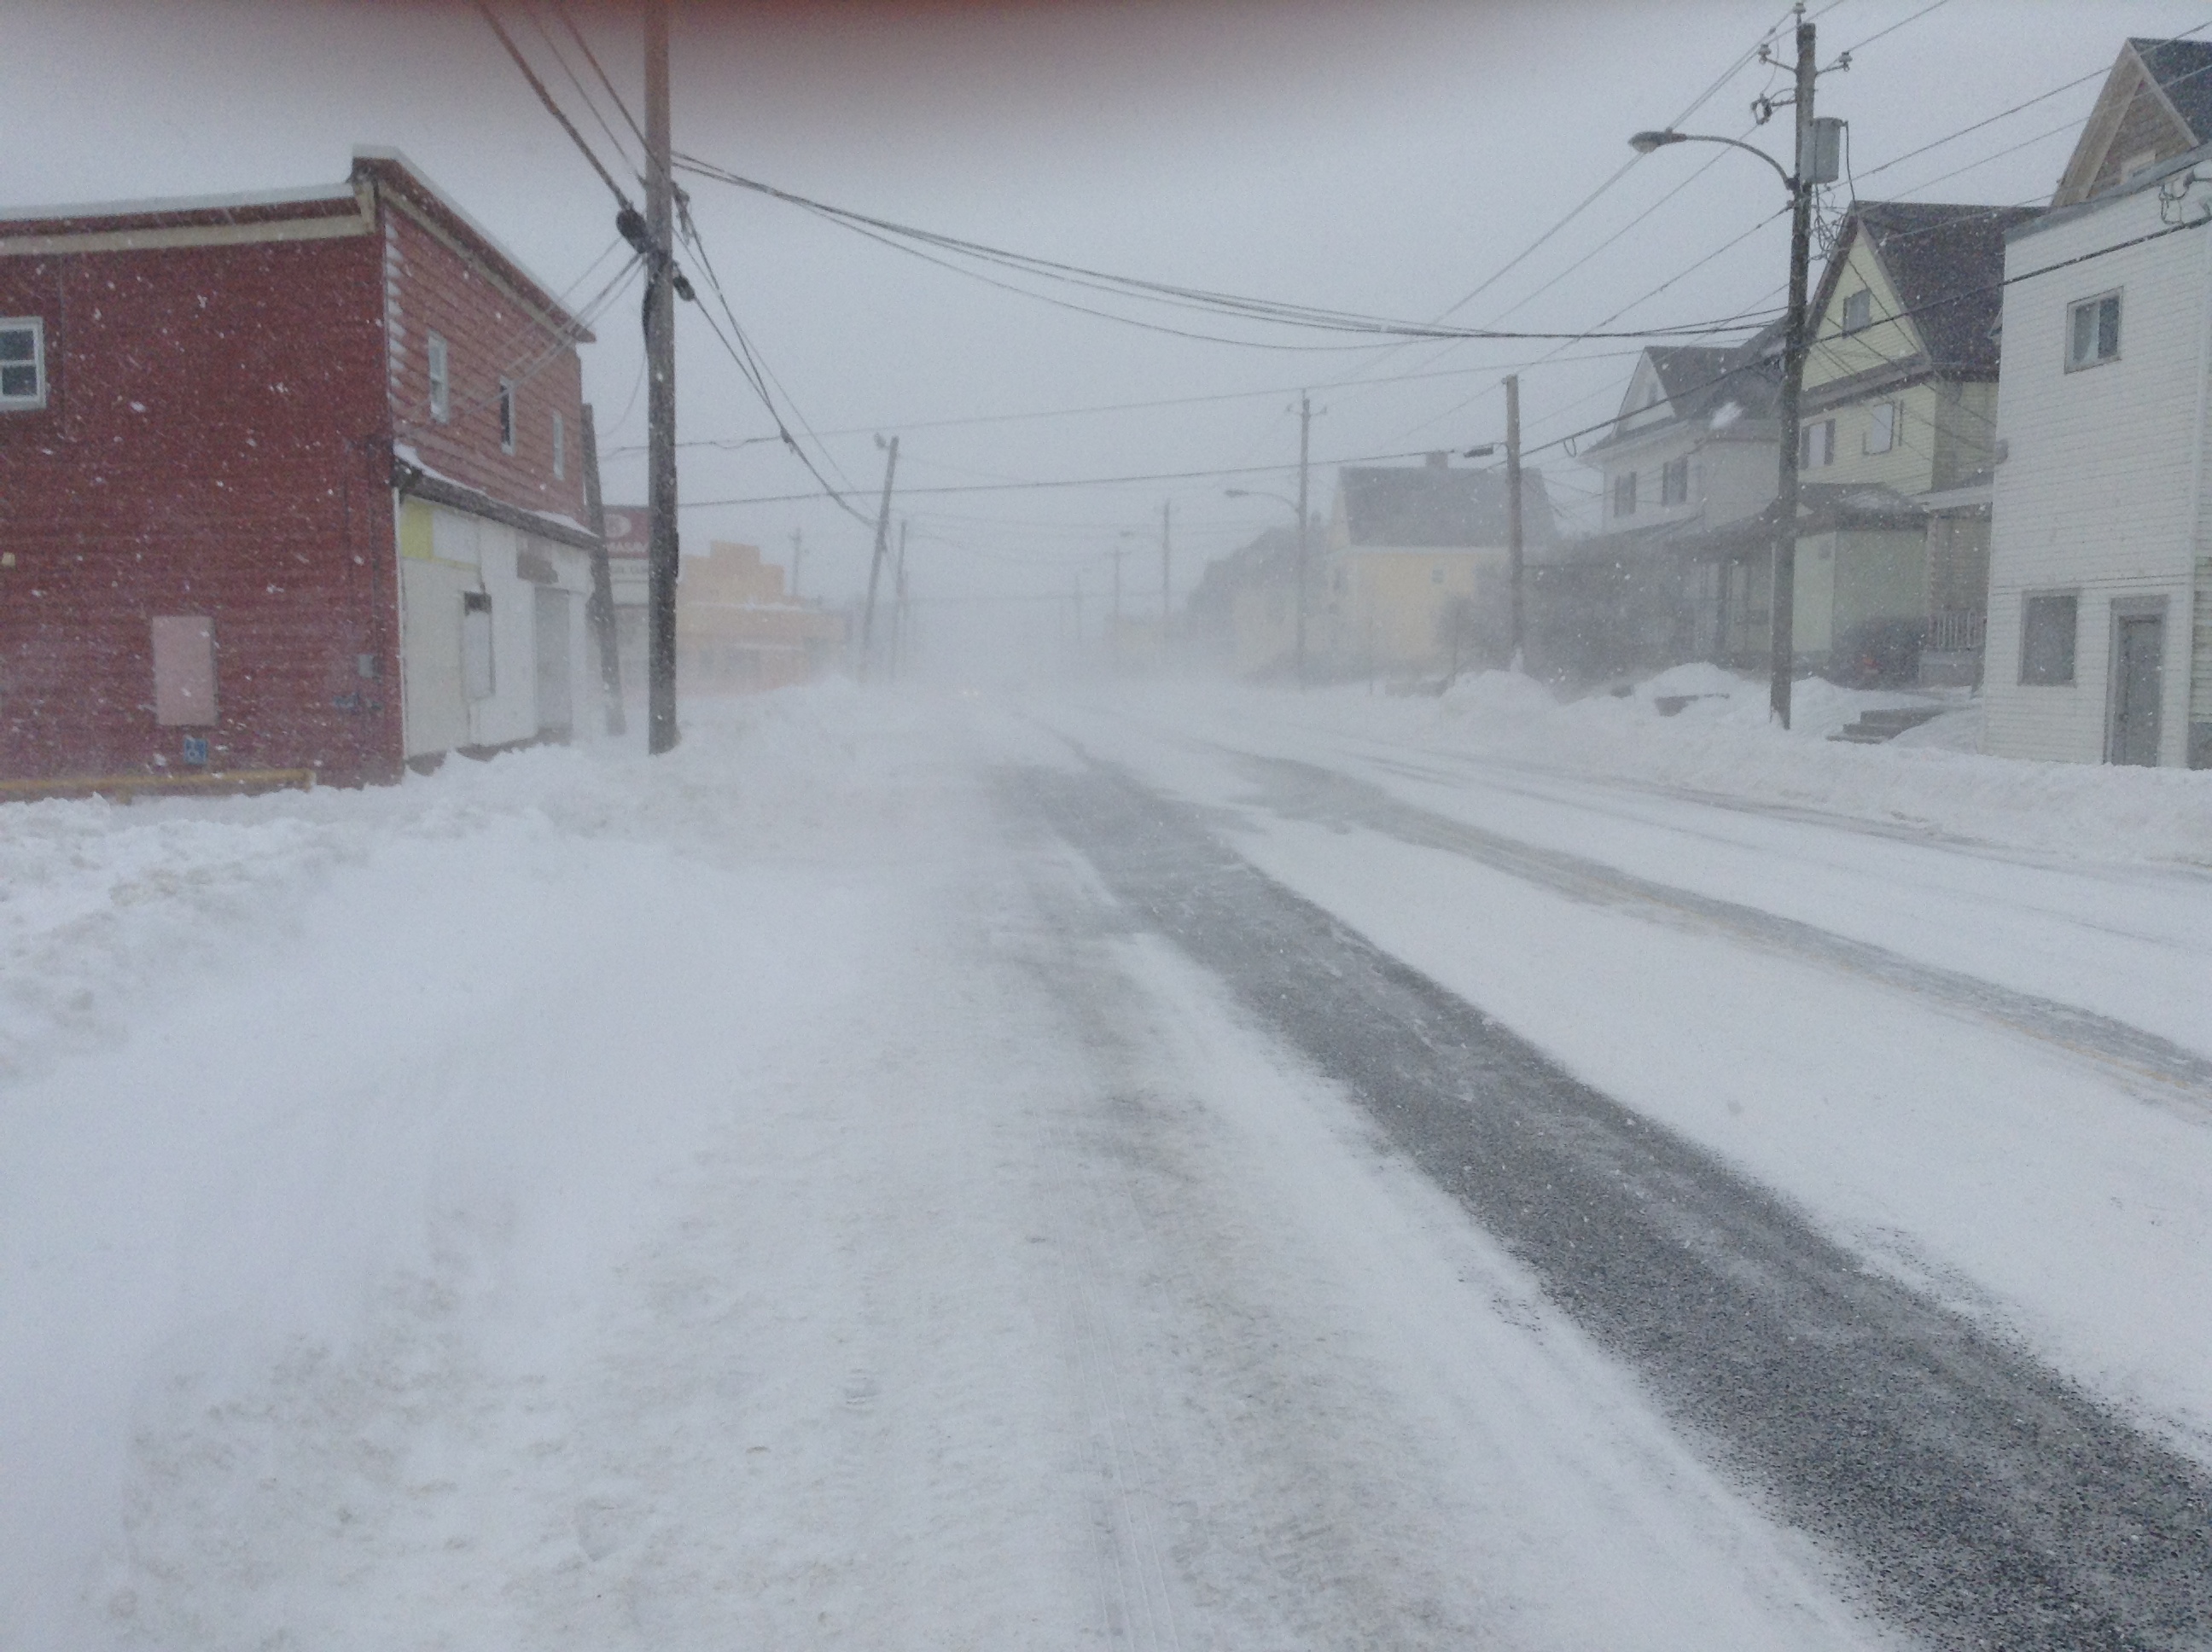 Massive Blizzard in Atlantic Canada